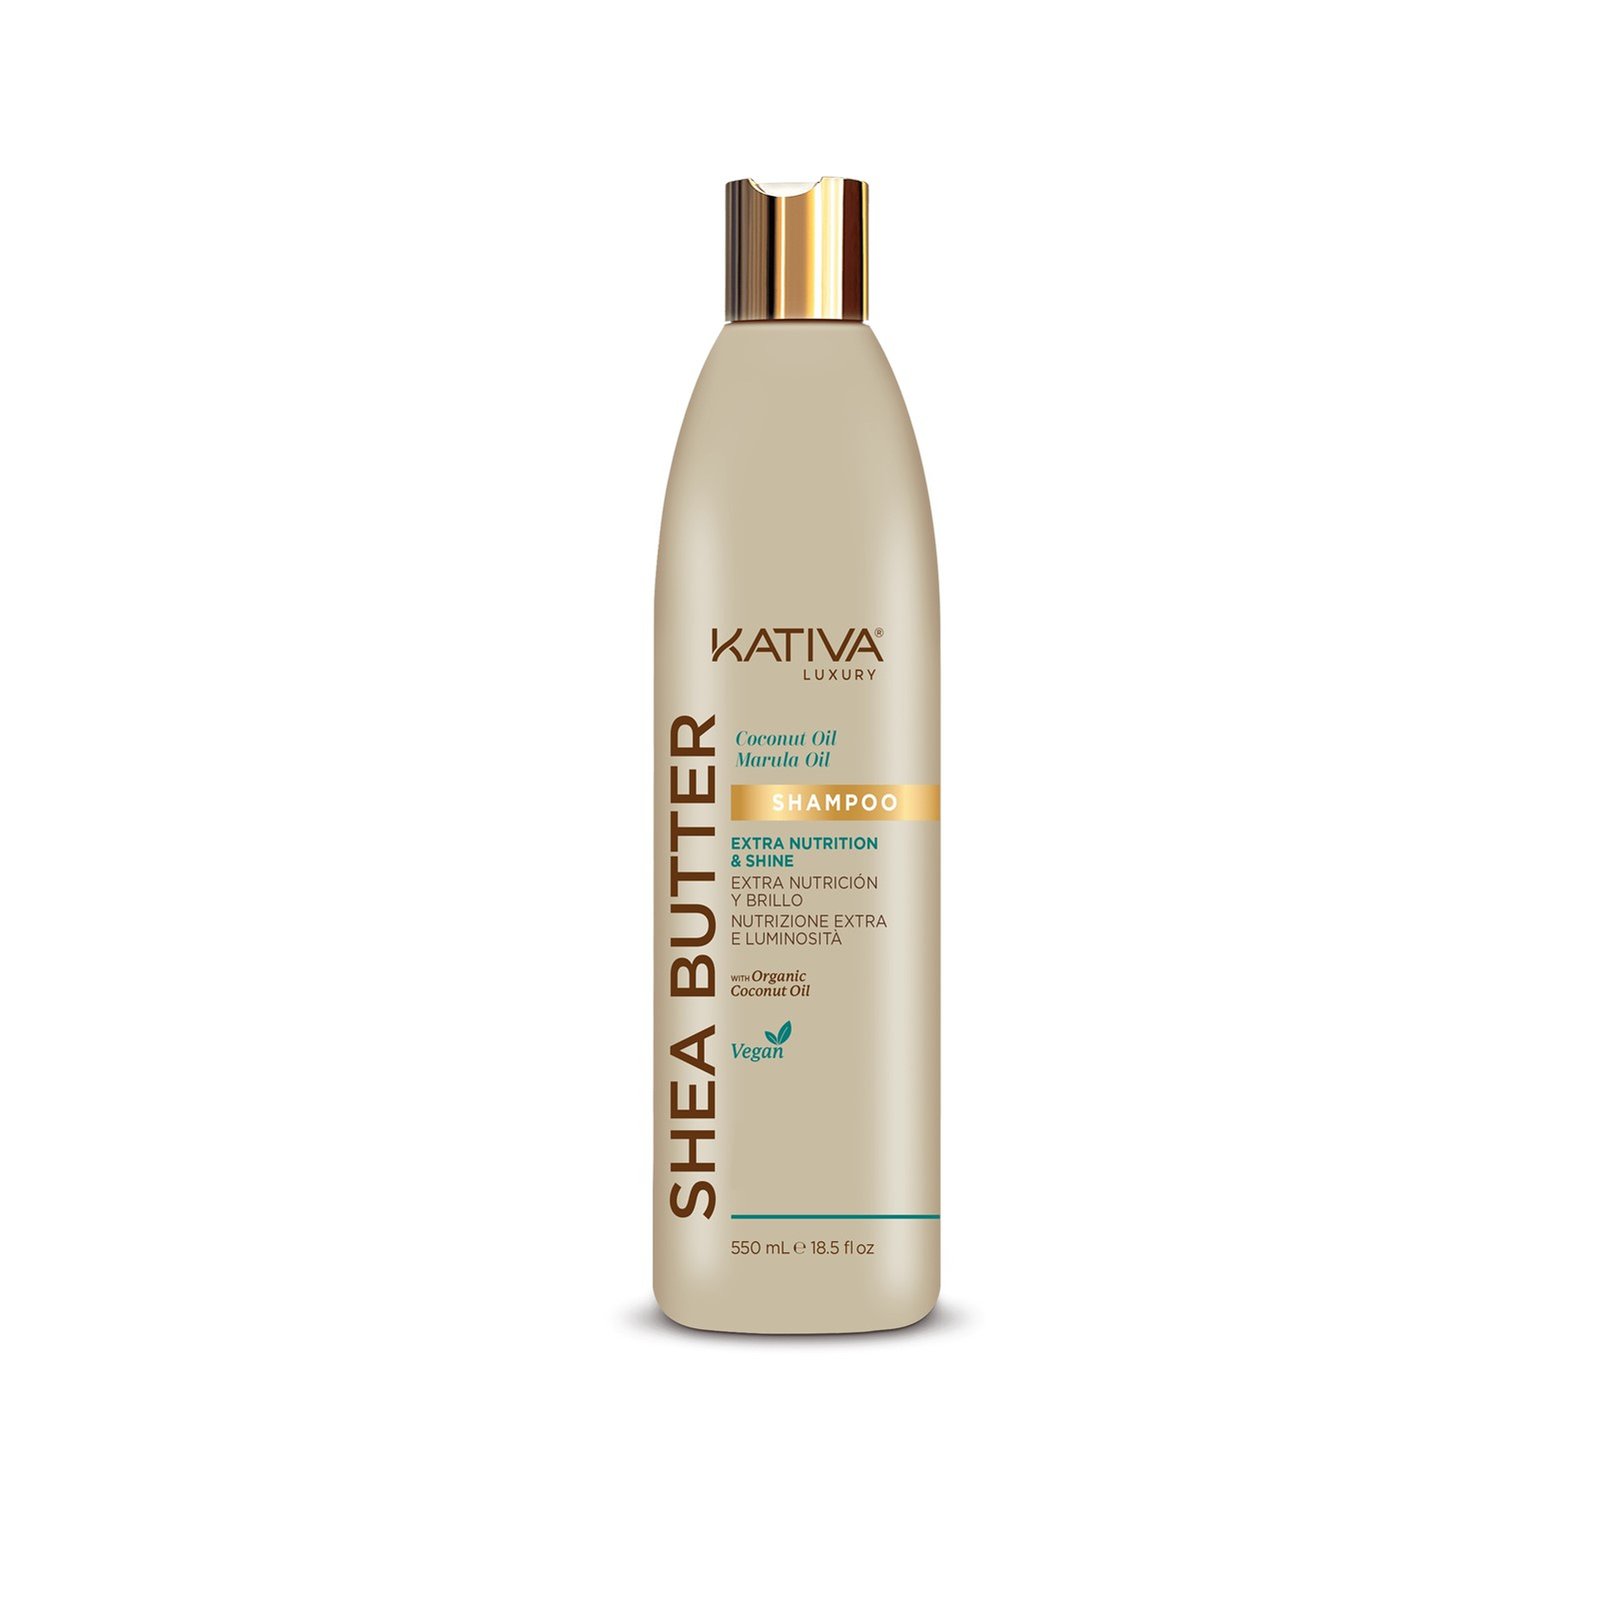 Kativa Luxury Shea Butter Extra Nutrition & Shine Shampoo 550ml (18.5 fl oz)